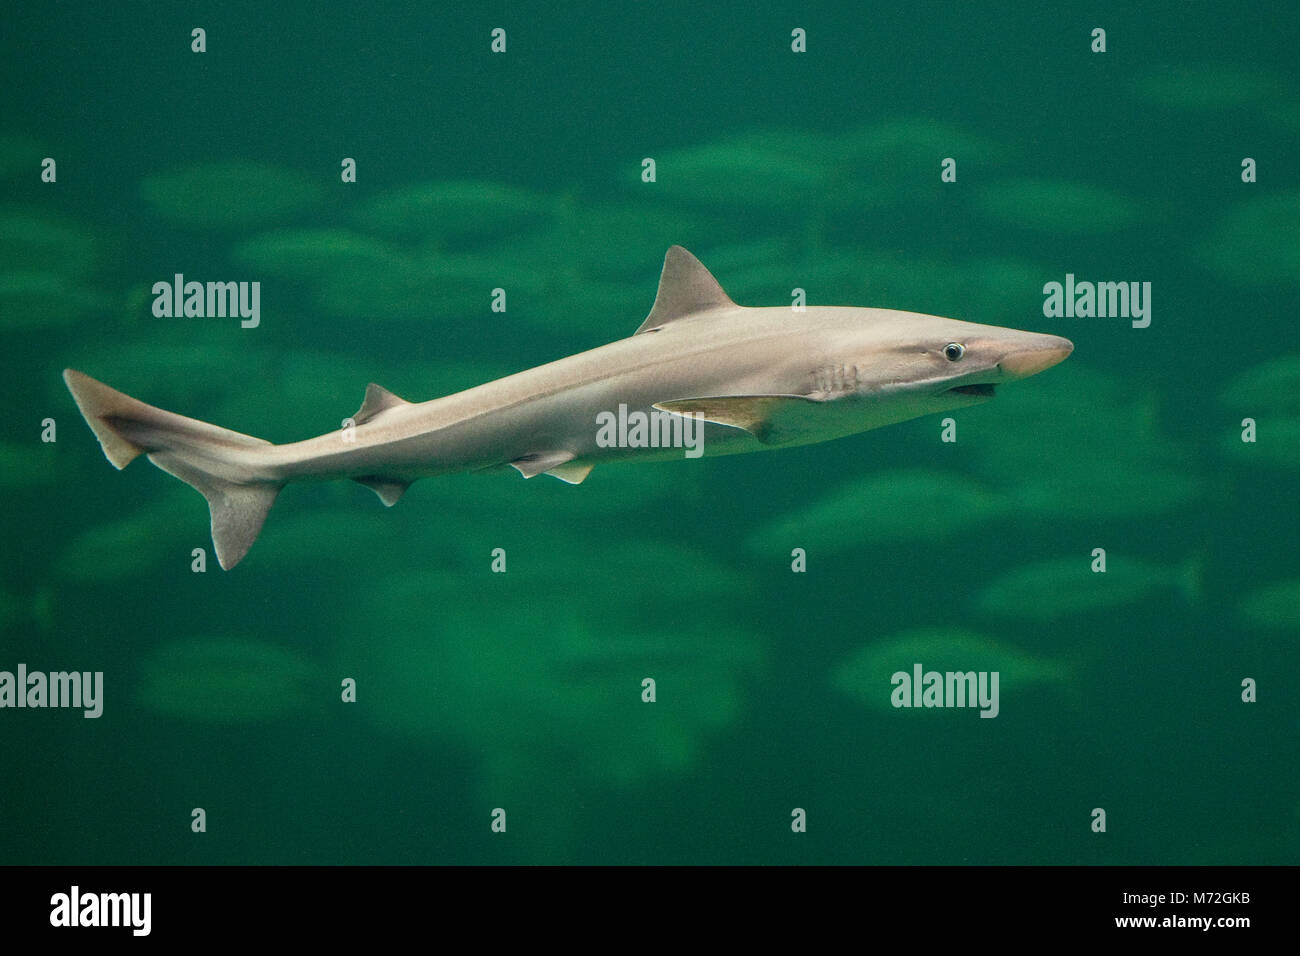 Hundshai, Hunds-Hai, Hai, Haie, Haifisch, Galeorhinus galeus, school shark, tope shark, soupfin shark, snapper shark Stock Photo